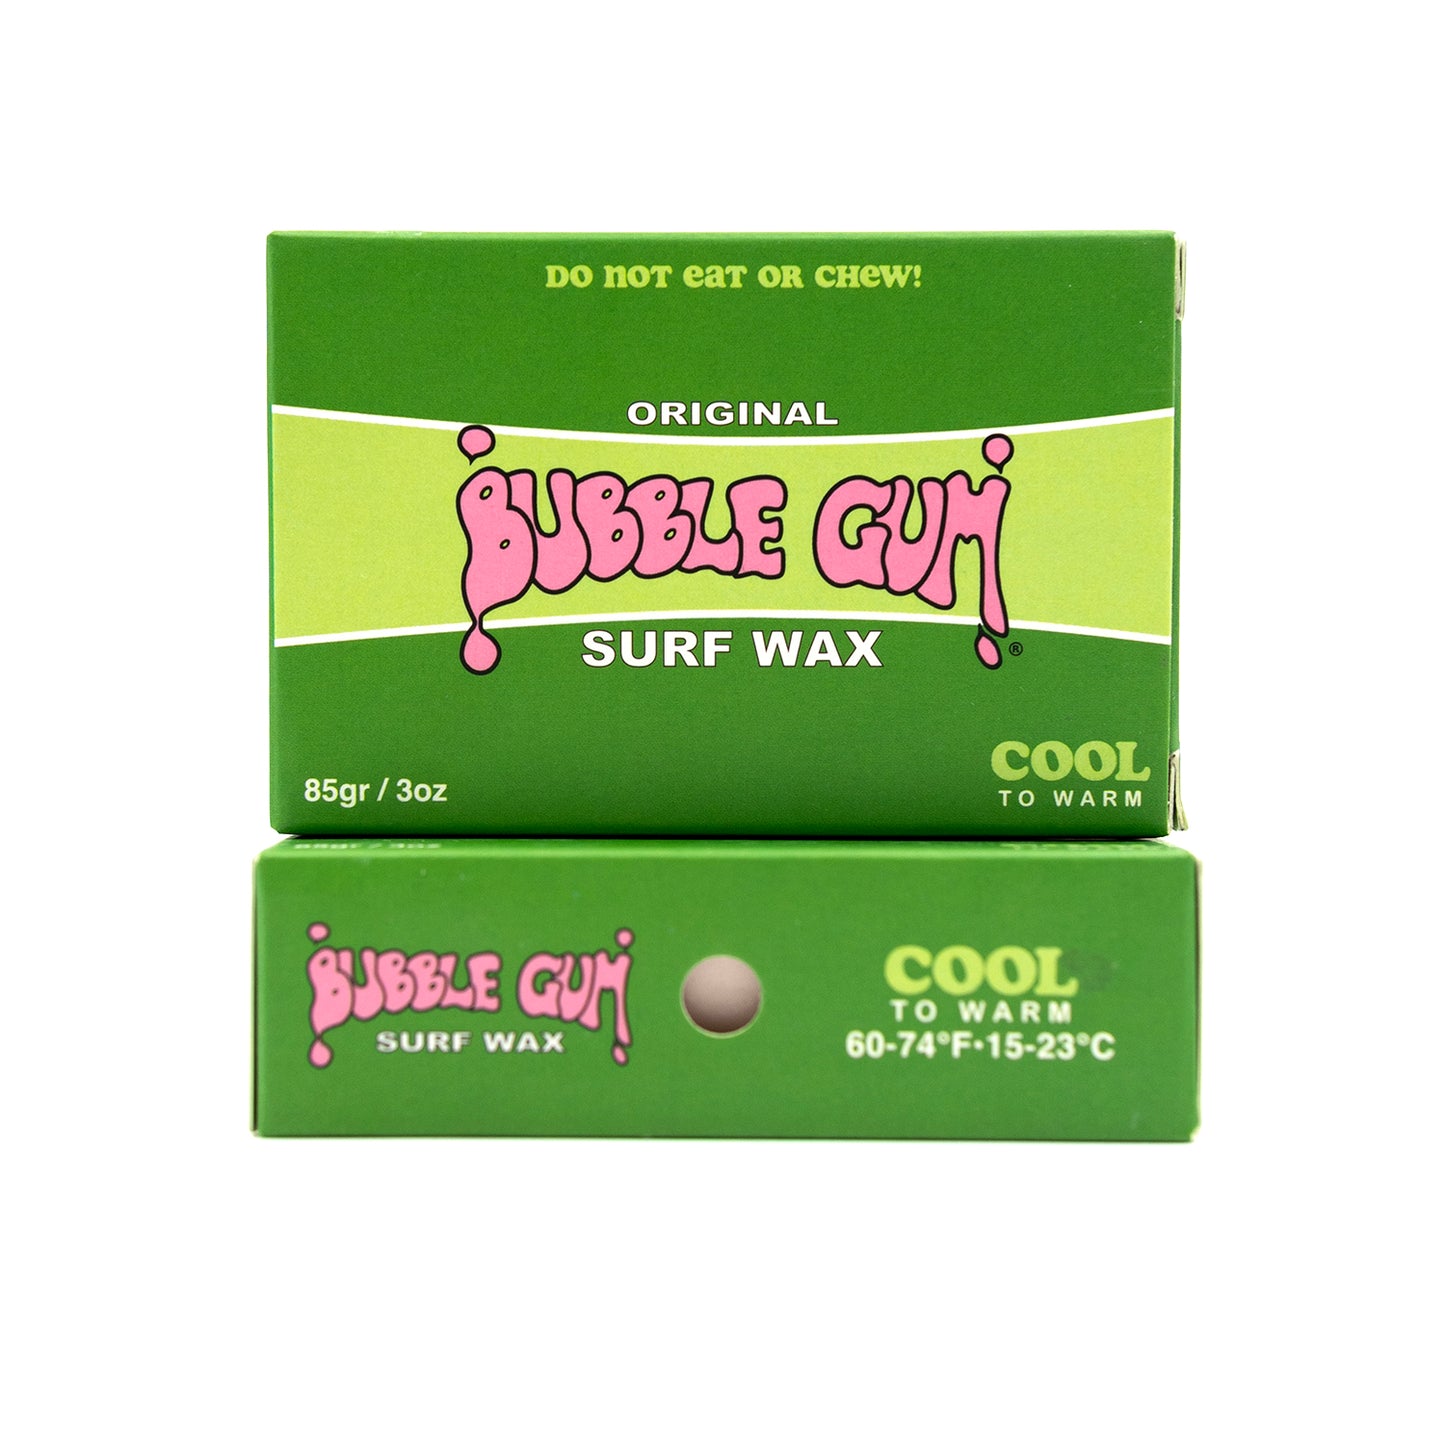 Bubble Gum "Original Formula" Surf Wax Box - Cool to Warm - 60°- 74°